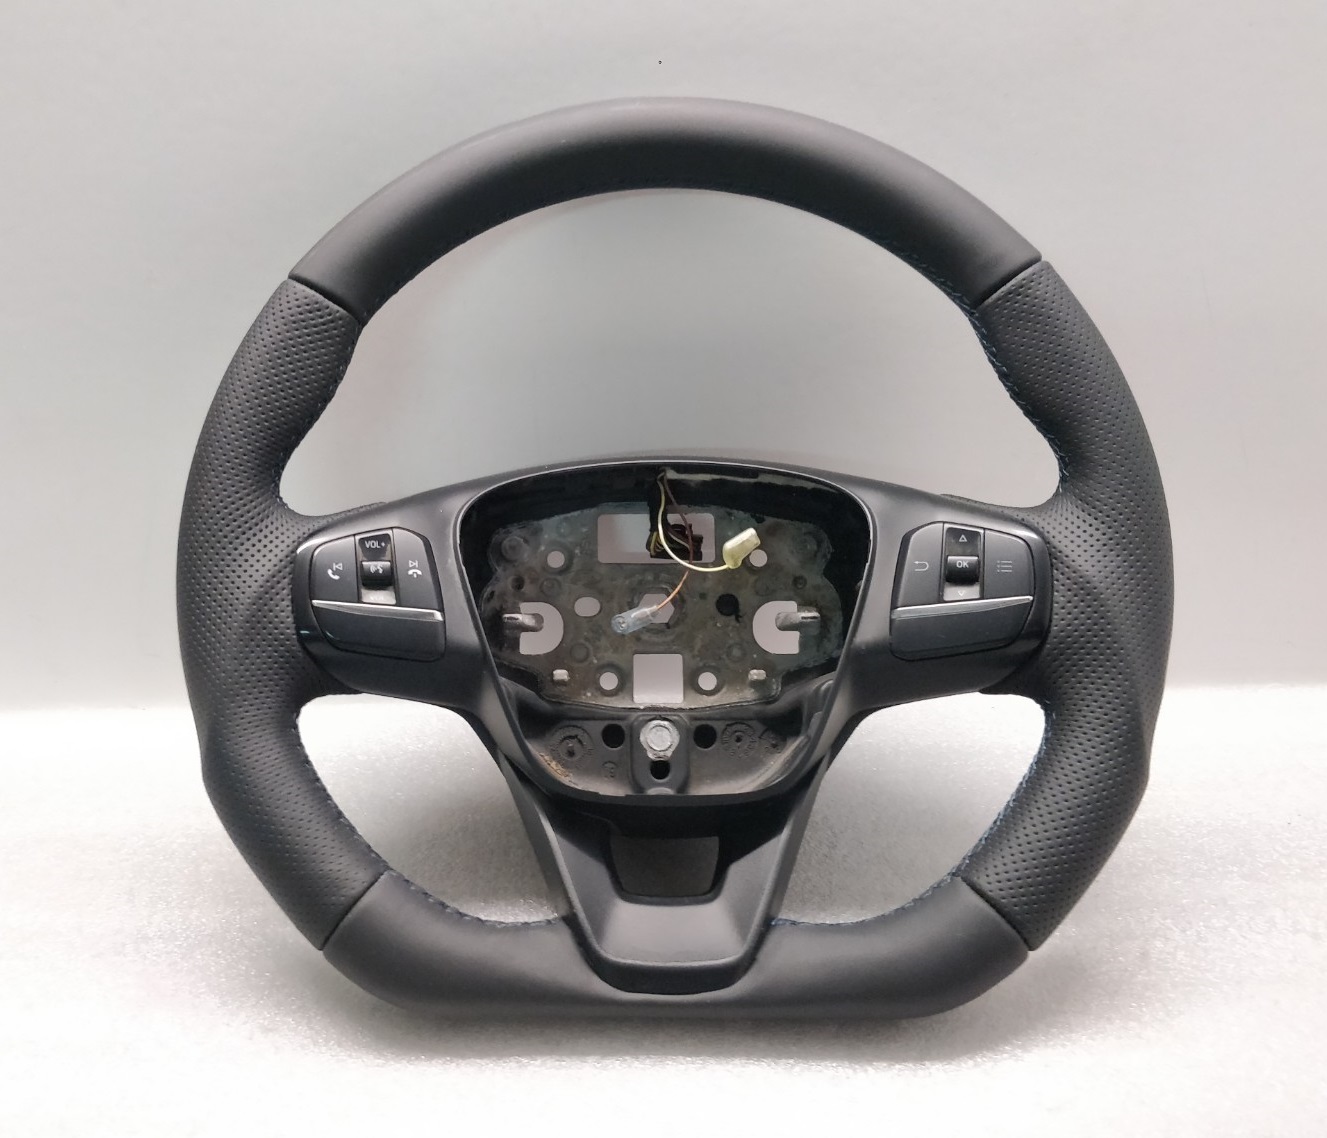 2019 Ford Transit Custom Sport steering wheel Flat JK21-3600-KA3ZHE New Leather Tuning